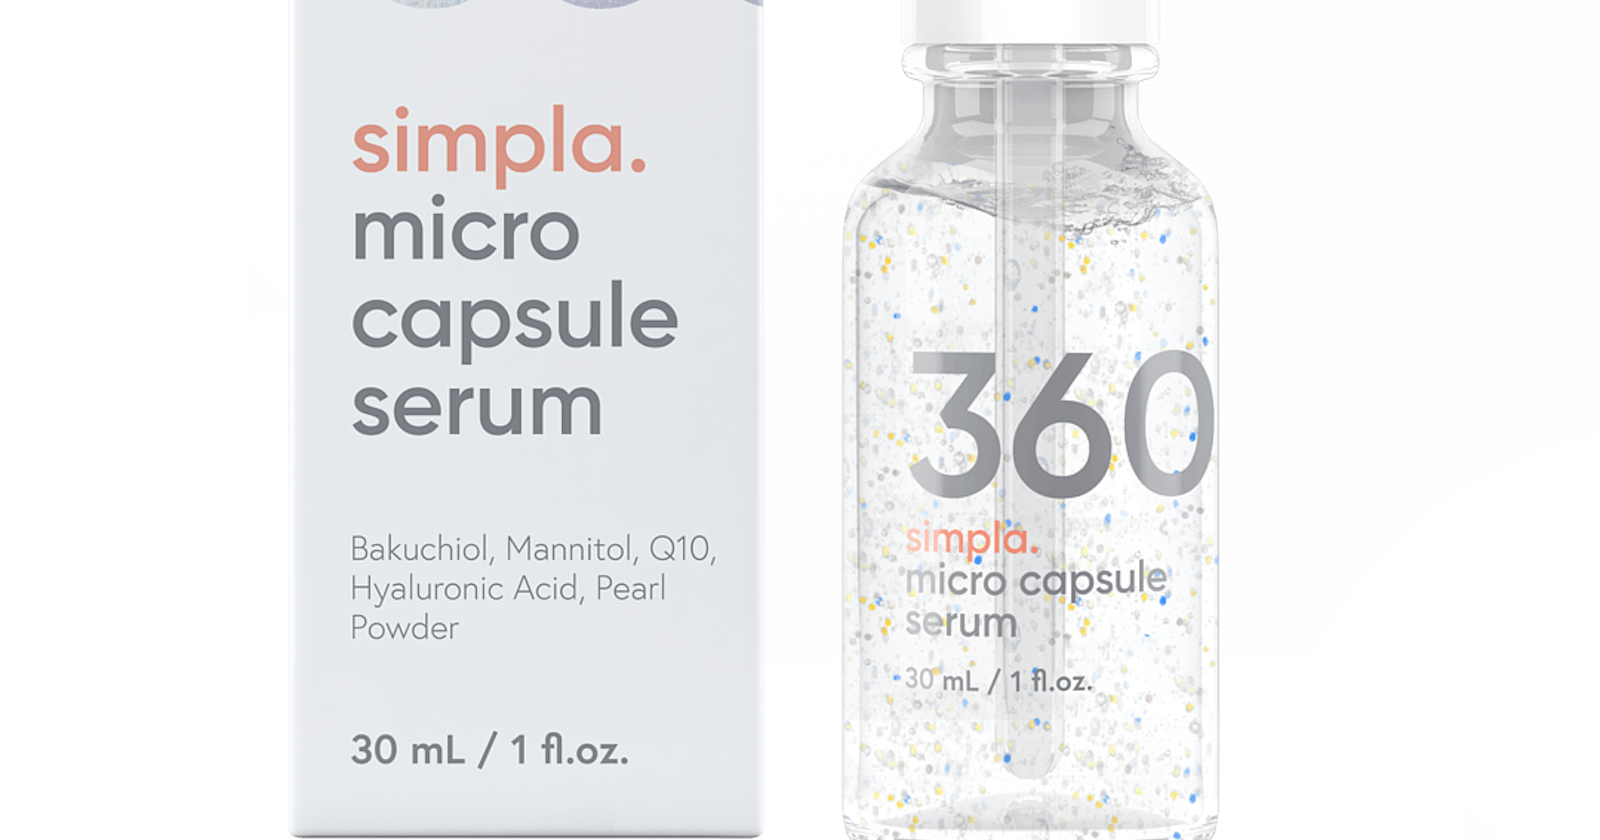 360 Simpla Micro Capsule Serum: A Comprehensive Skincare Solution